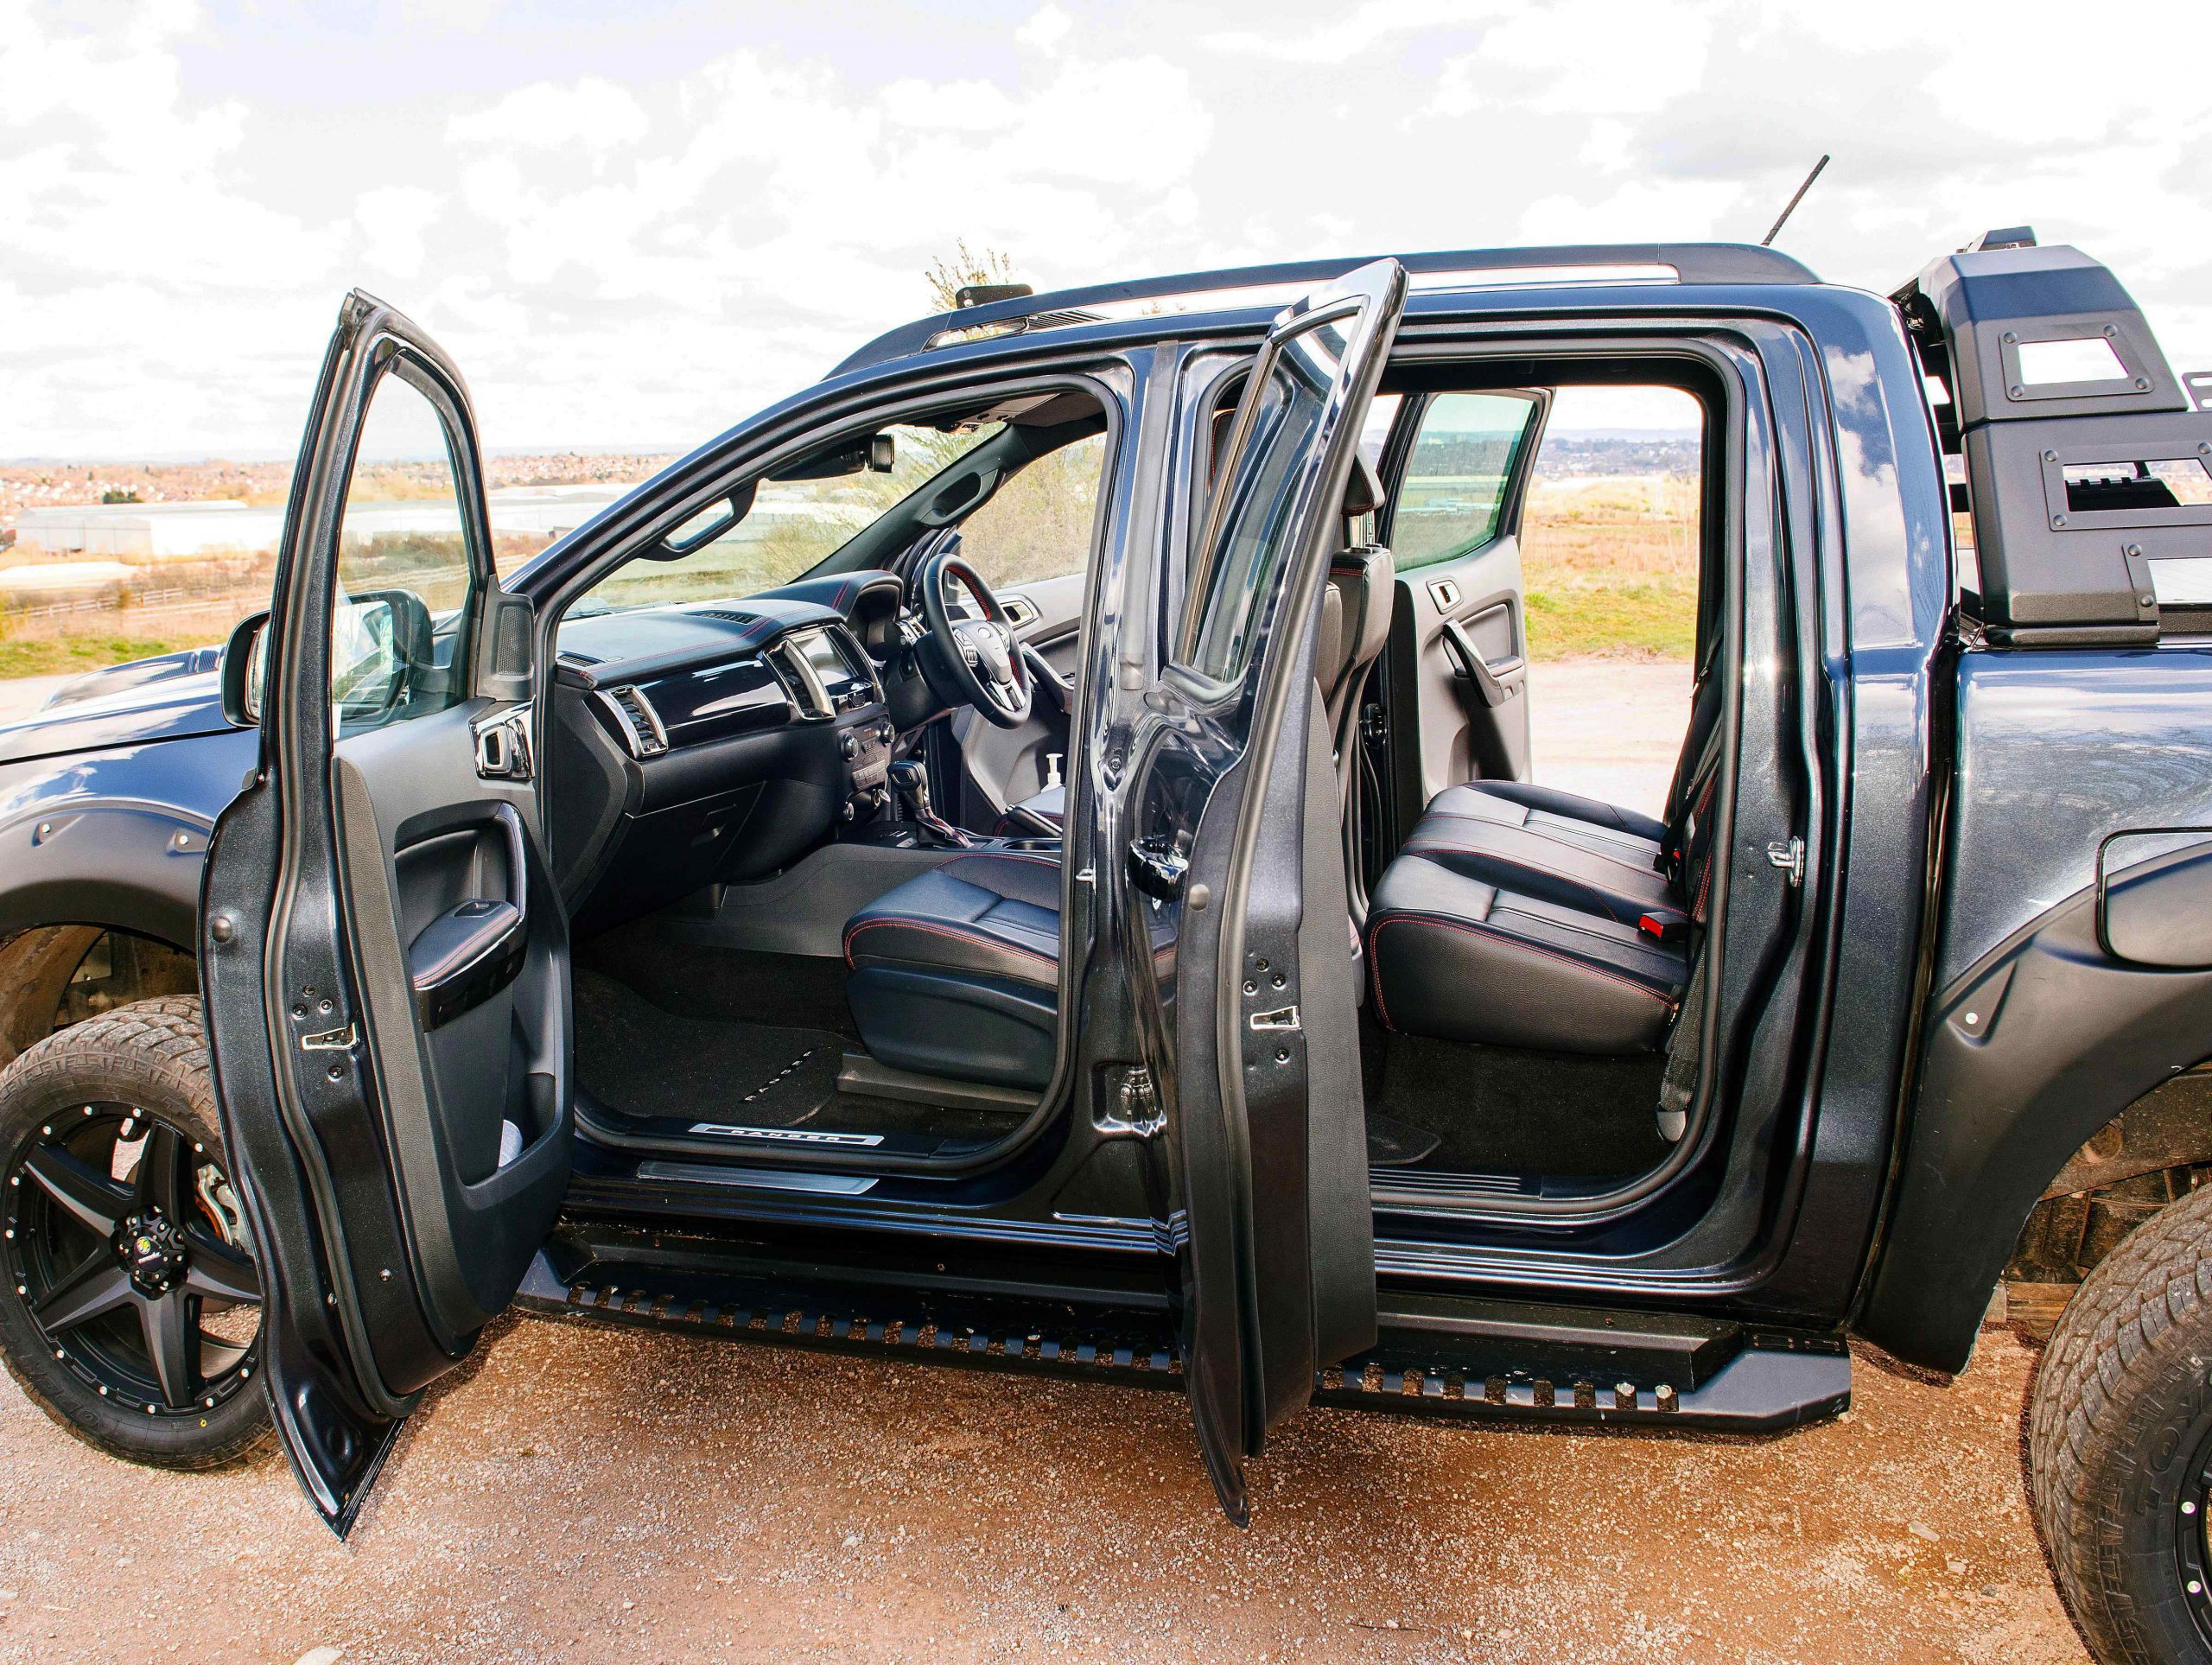 Ford-Ranger-Extreme-External-Doors-Open